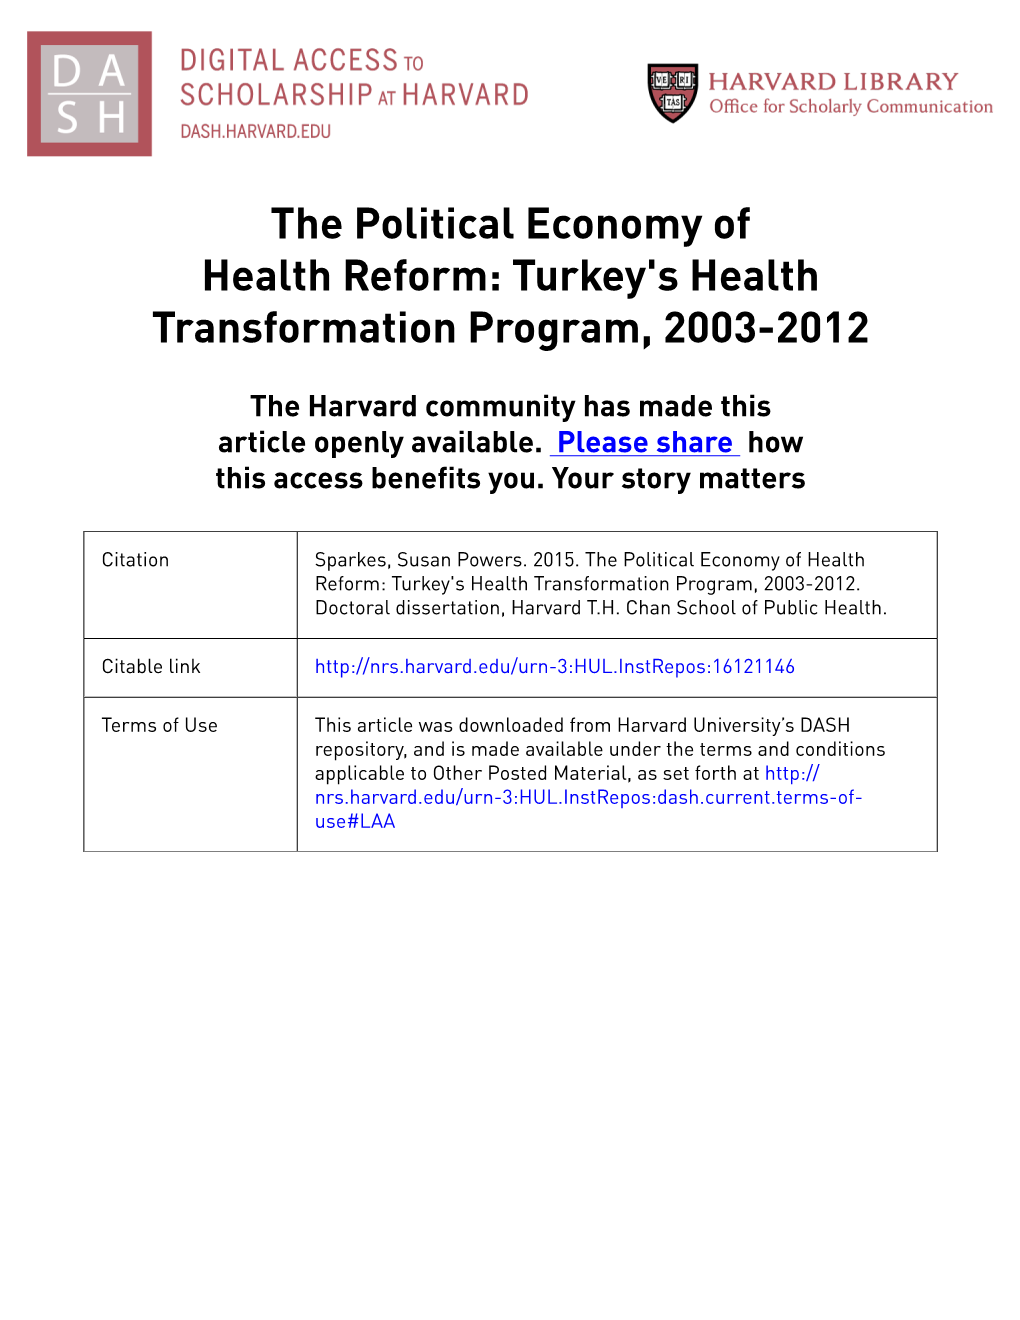 Turkey's Health Transformation Program, 2003-2012